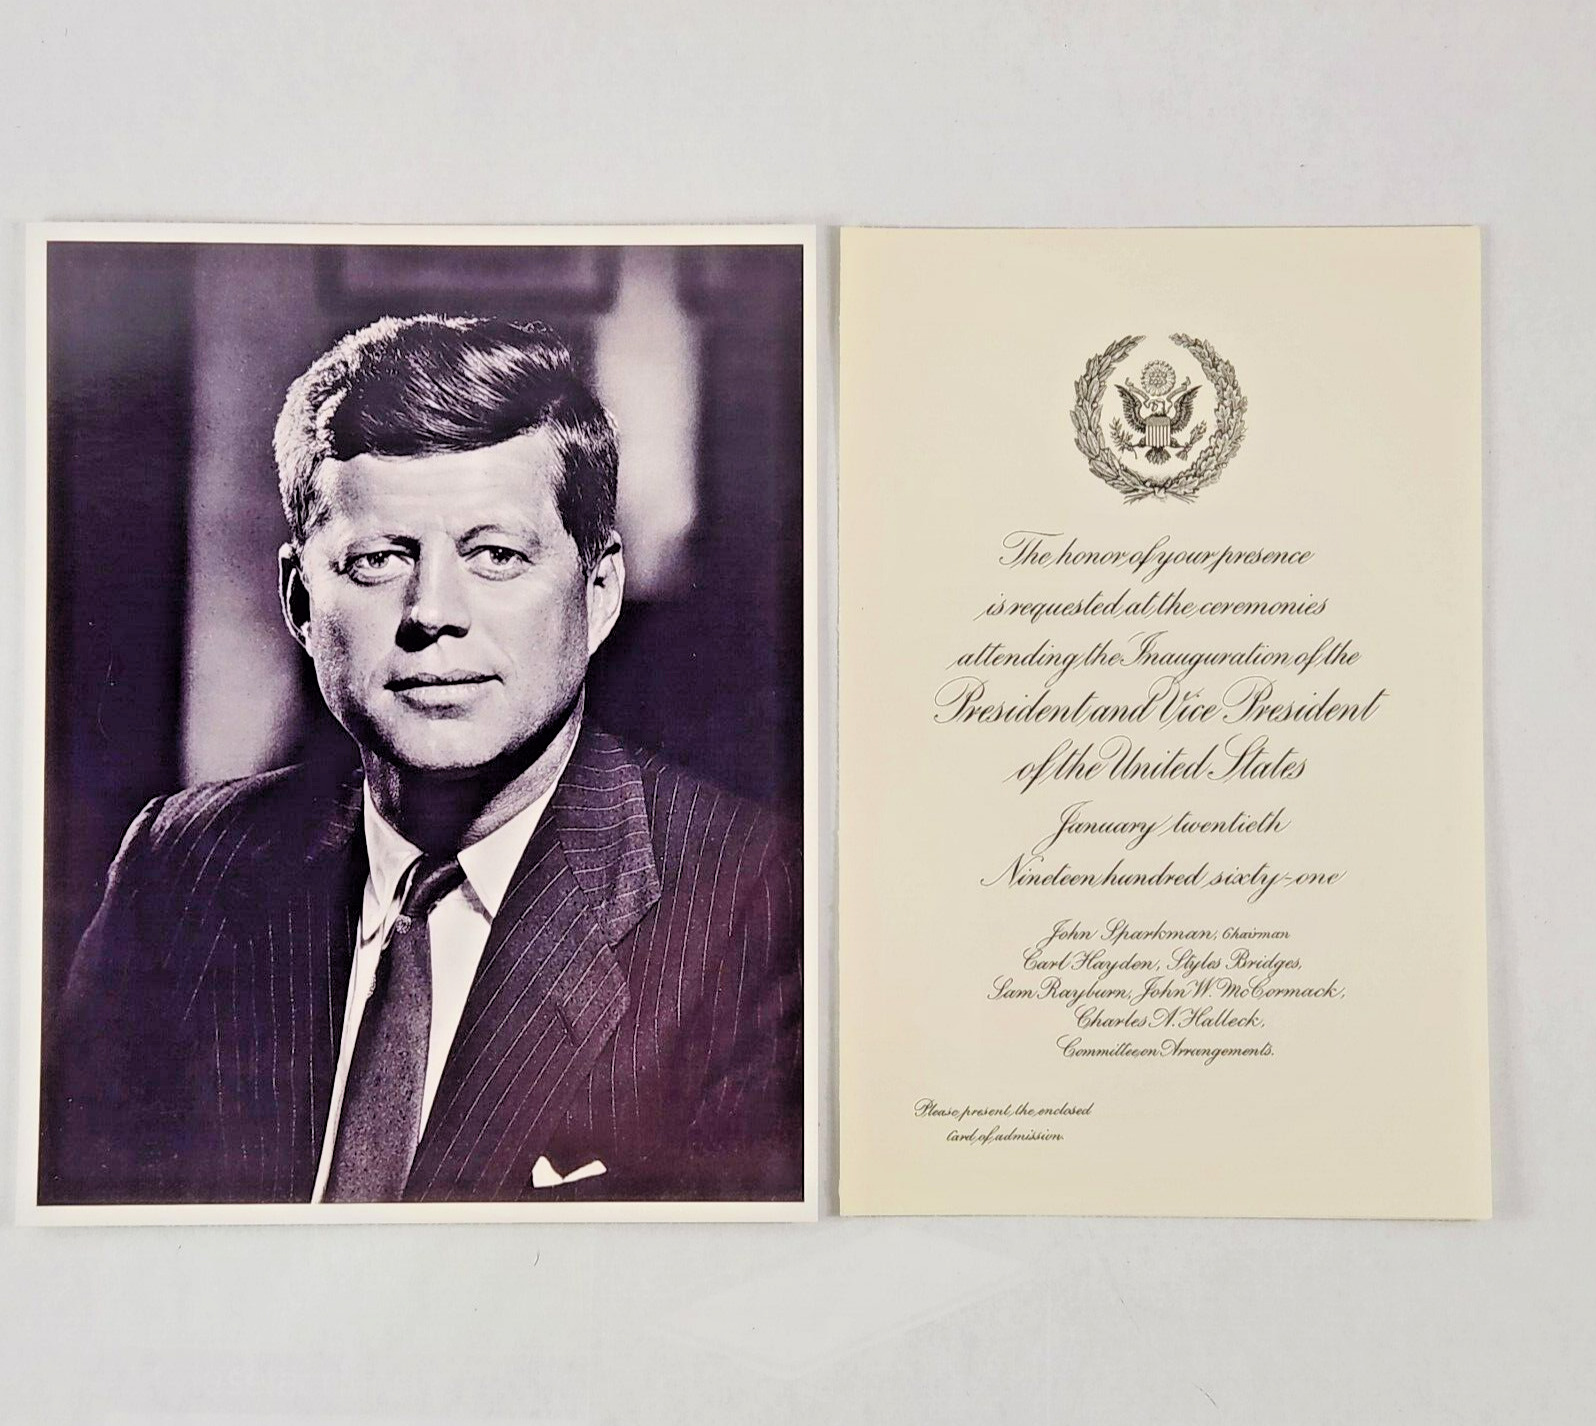 1961 John F. Kennedy Congressional Inaugural Ceremonies Invitation and Photo JFK